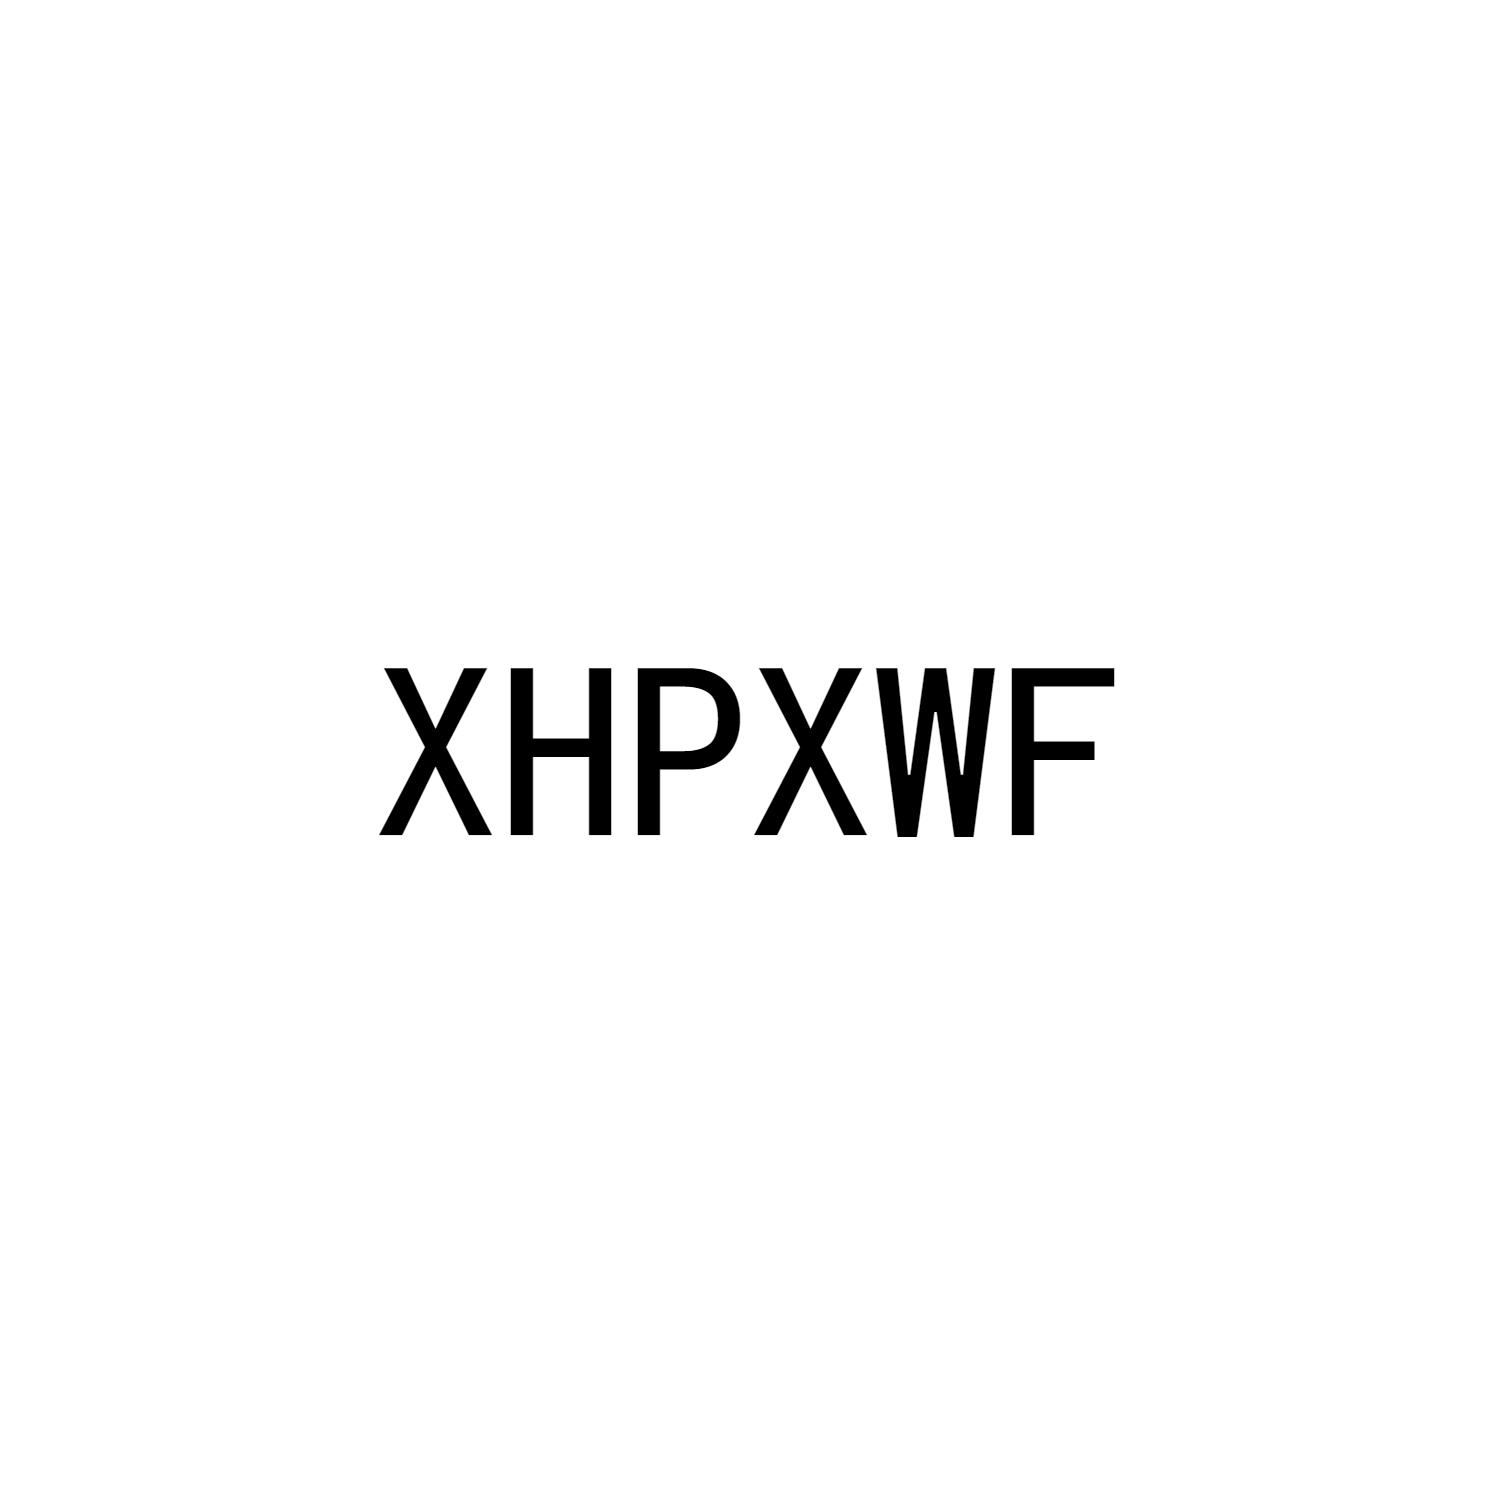 XHPXWF